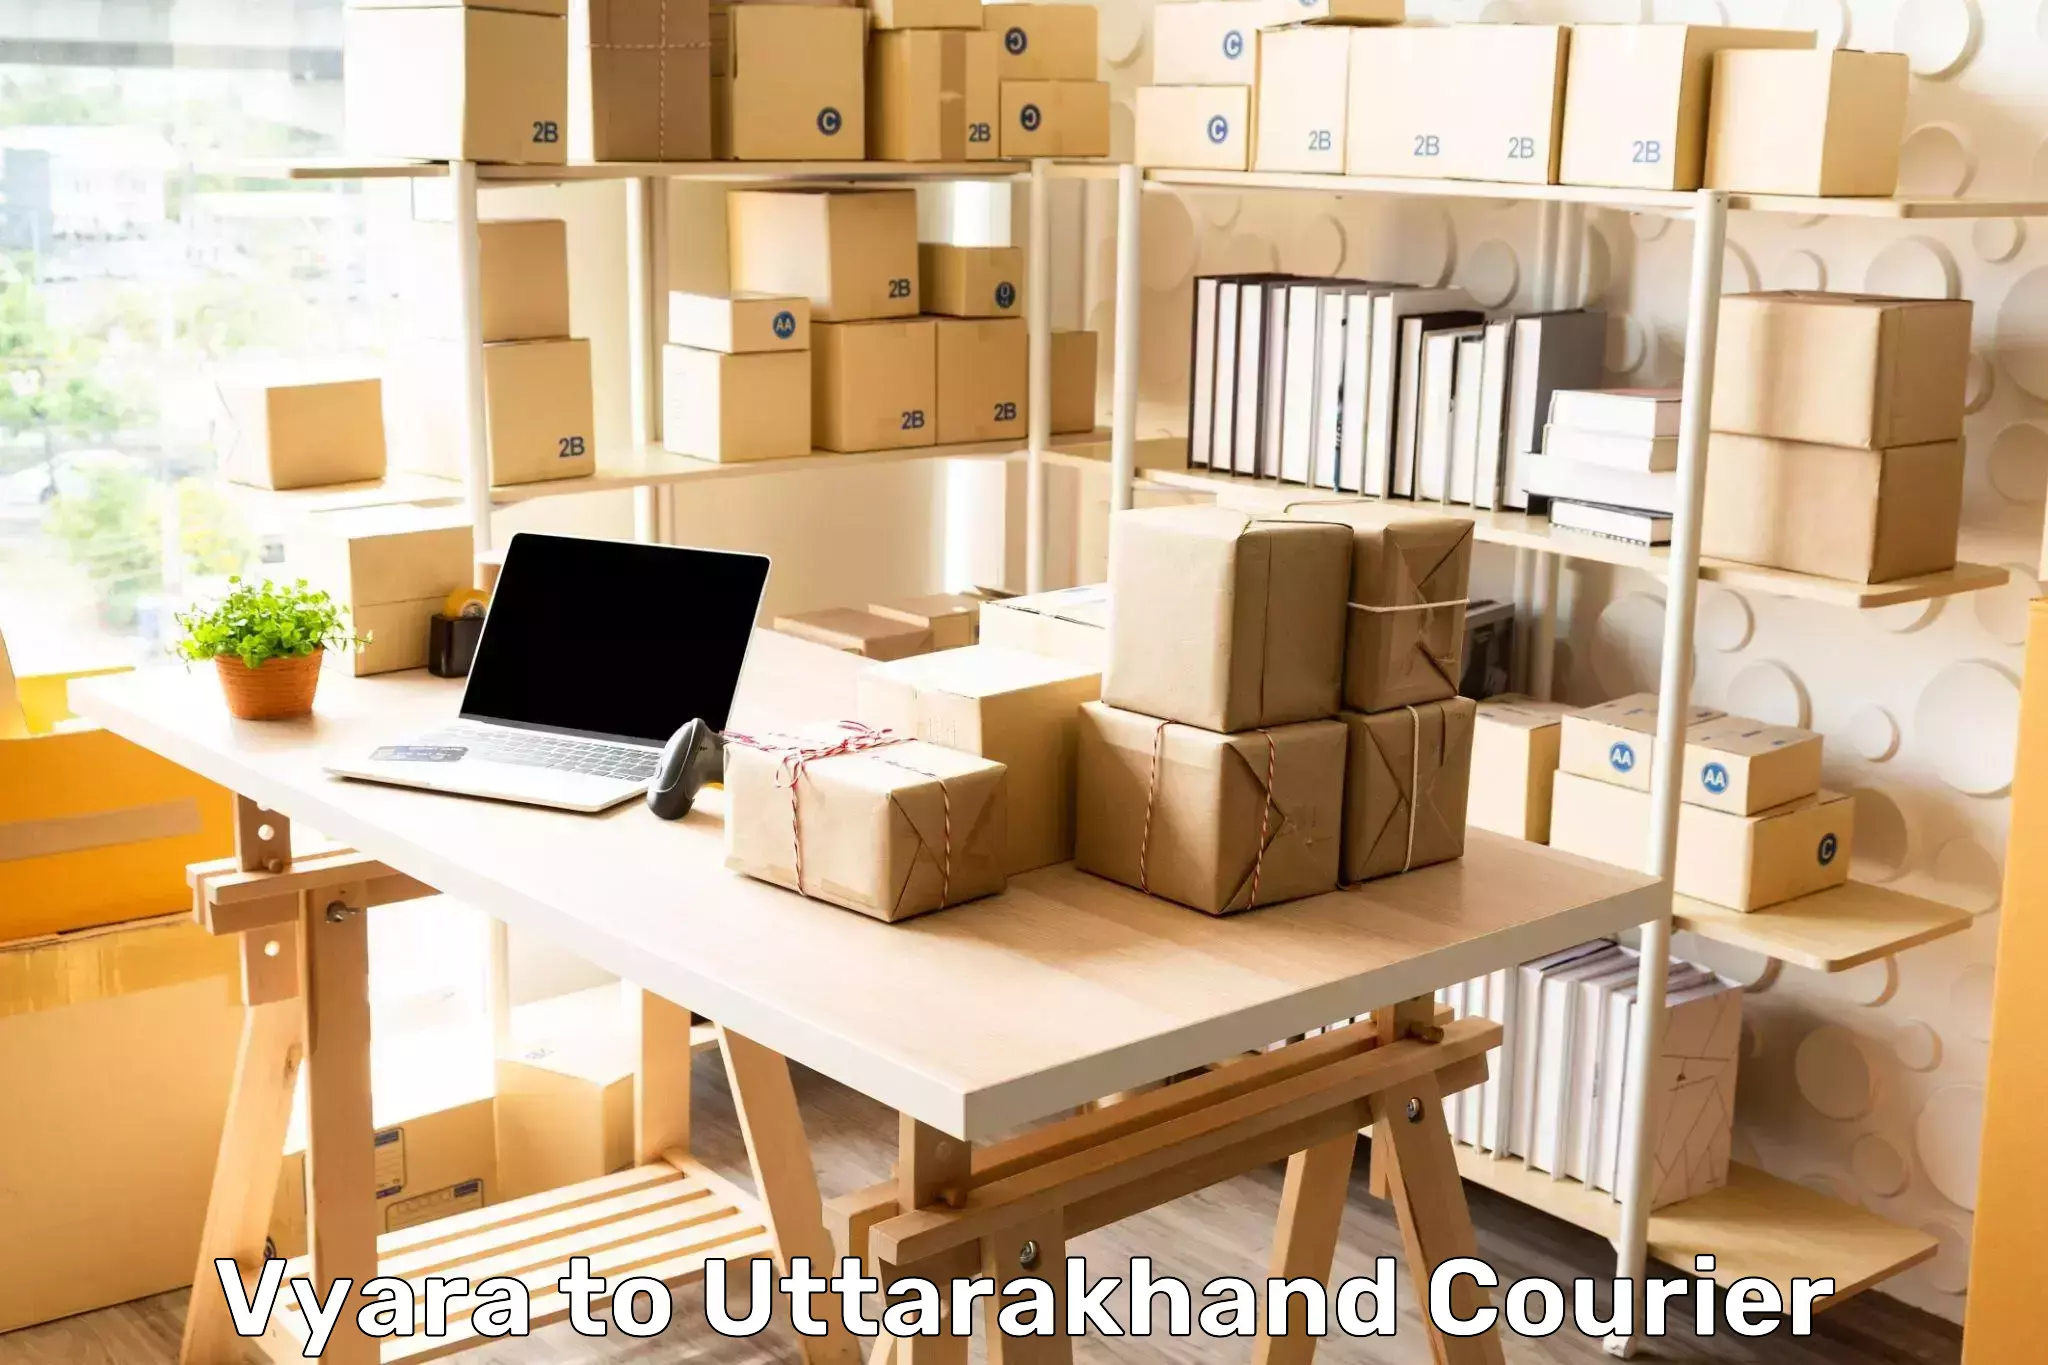 High-speed parcel service Vyara to Uttarakhand